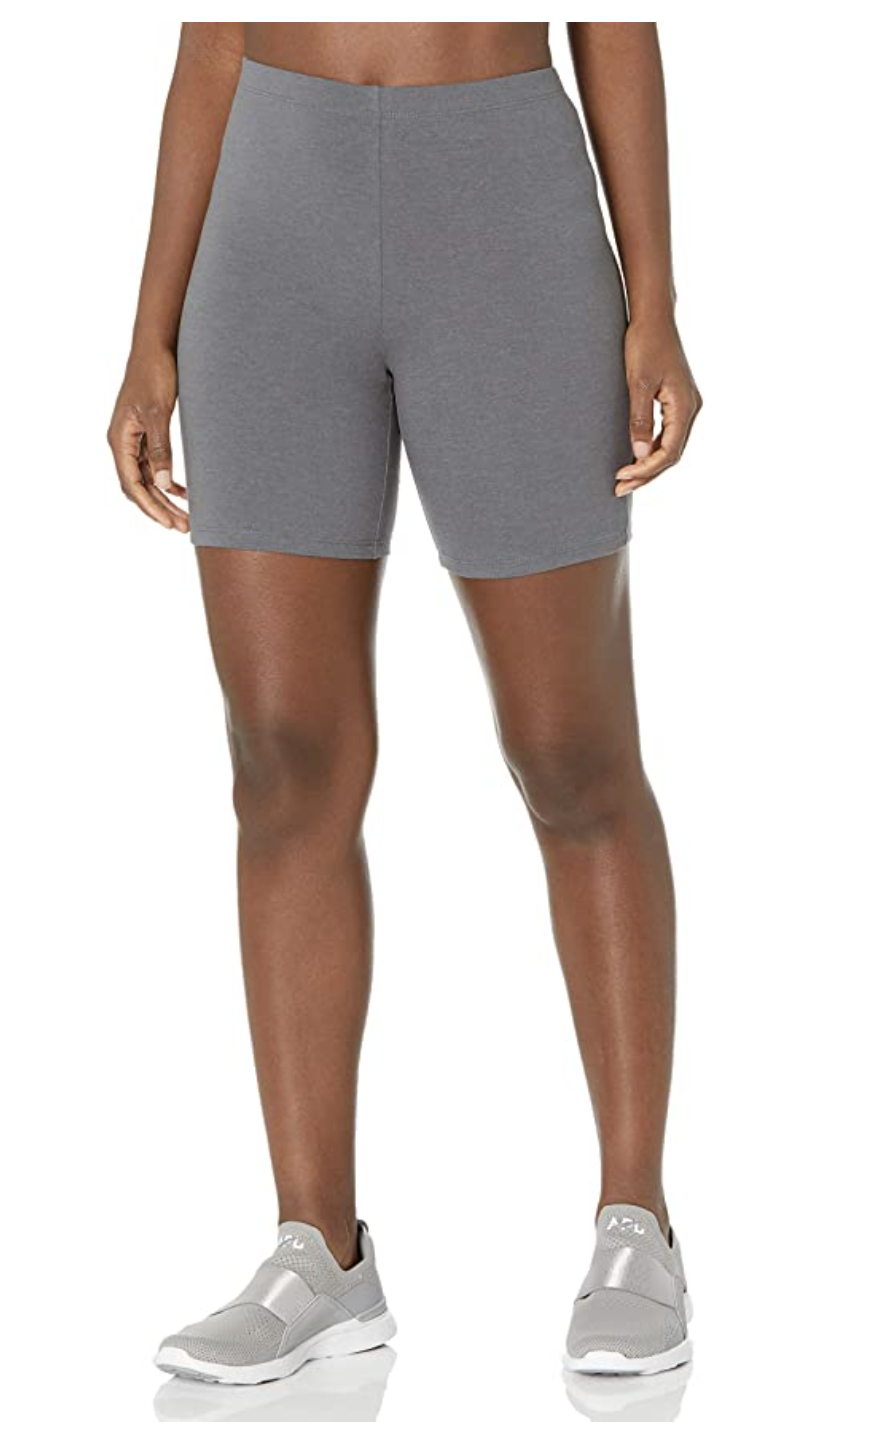 Gray Biker Shorts